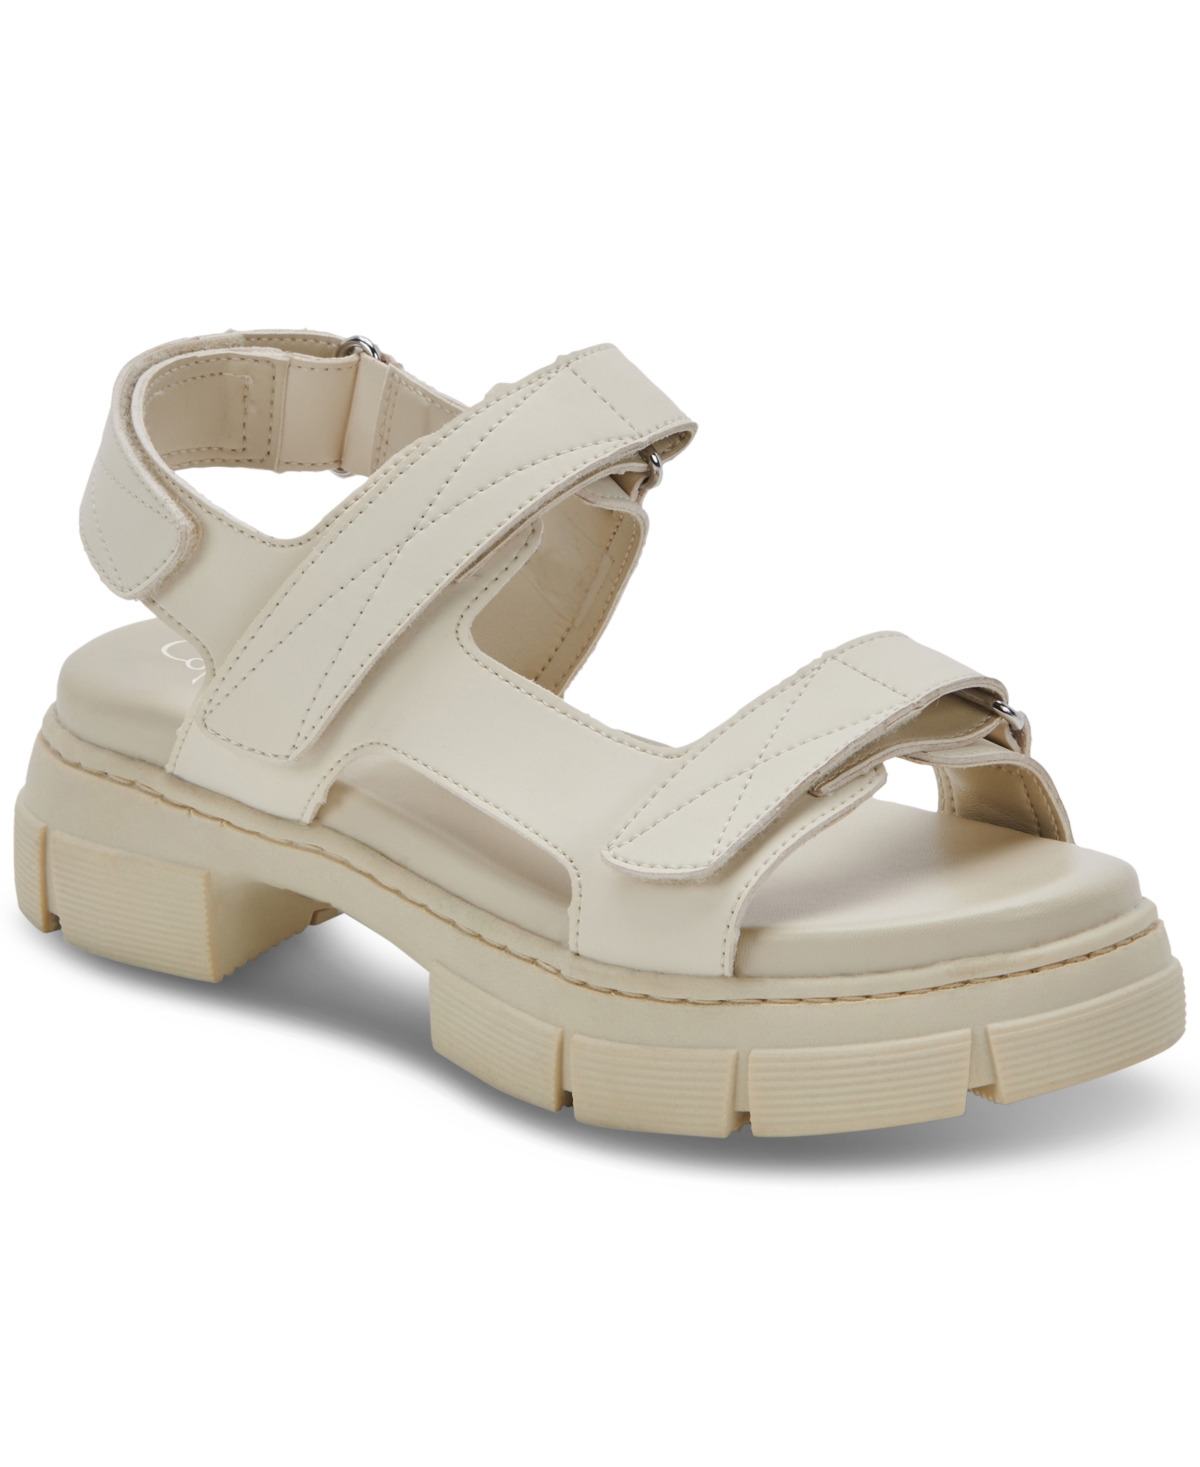 Aqua College Women's Hux Waterproof Sandals, Created for Macy's Women's Shoes